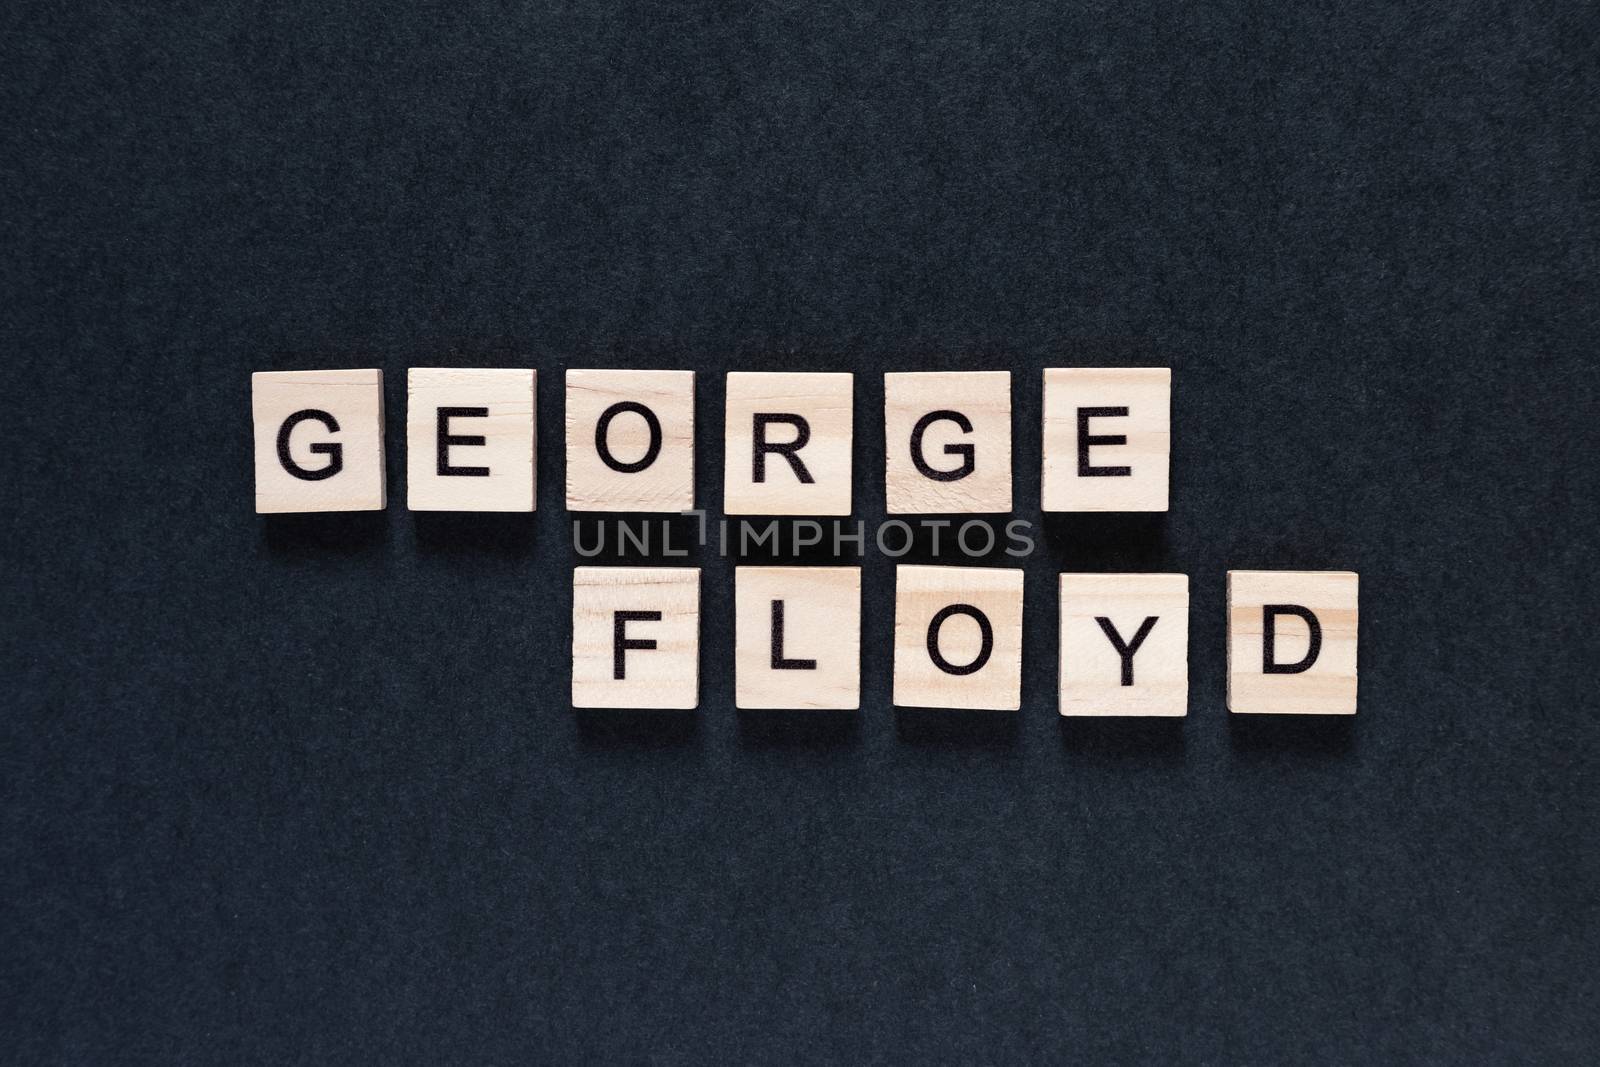 George Floyd lettering on a black background, inscription on a black background